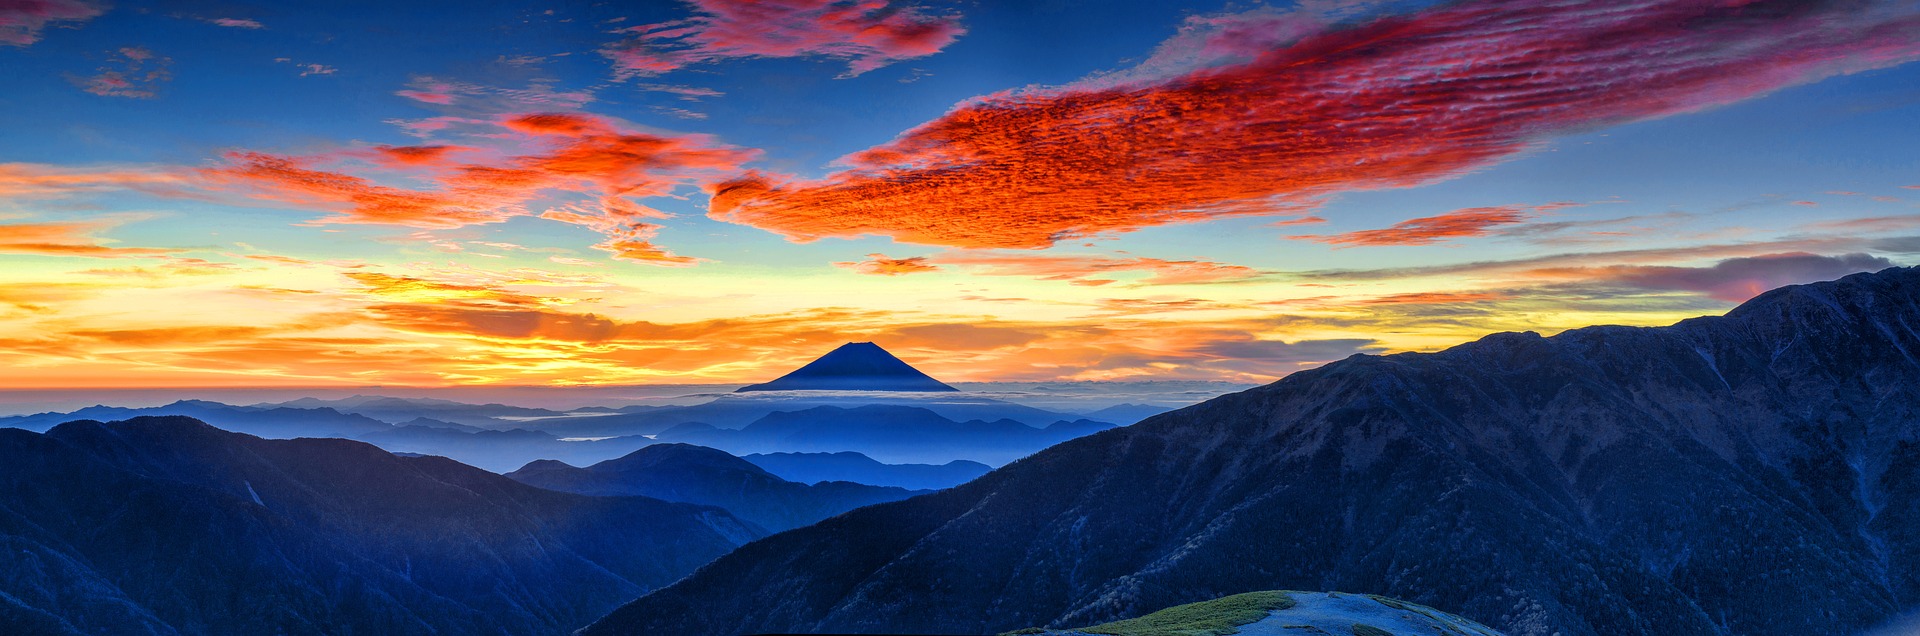 Mt Fuji Japan Sonesha Travel